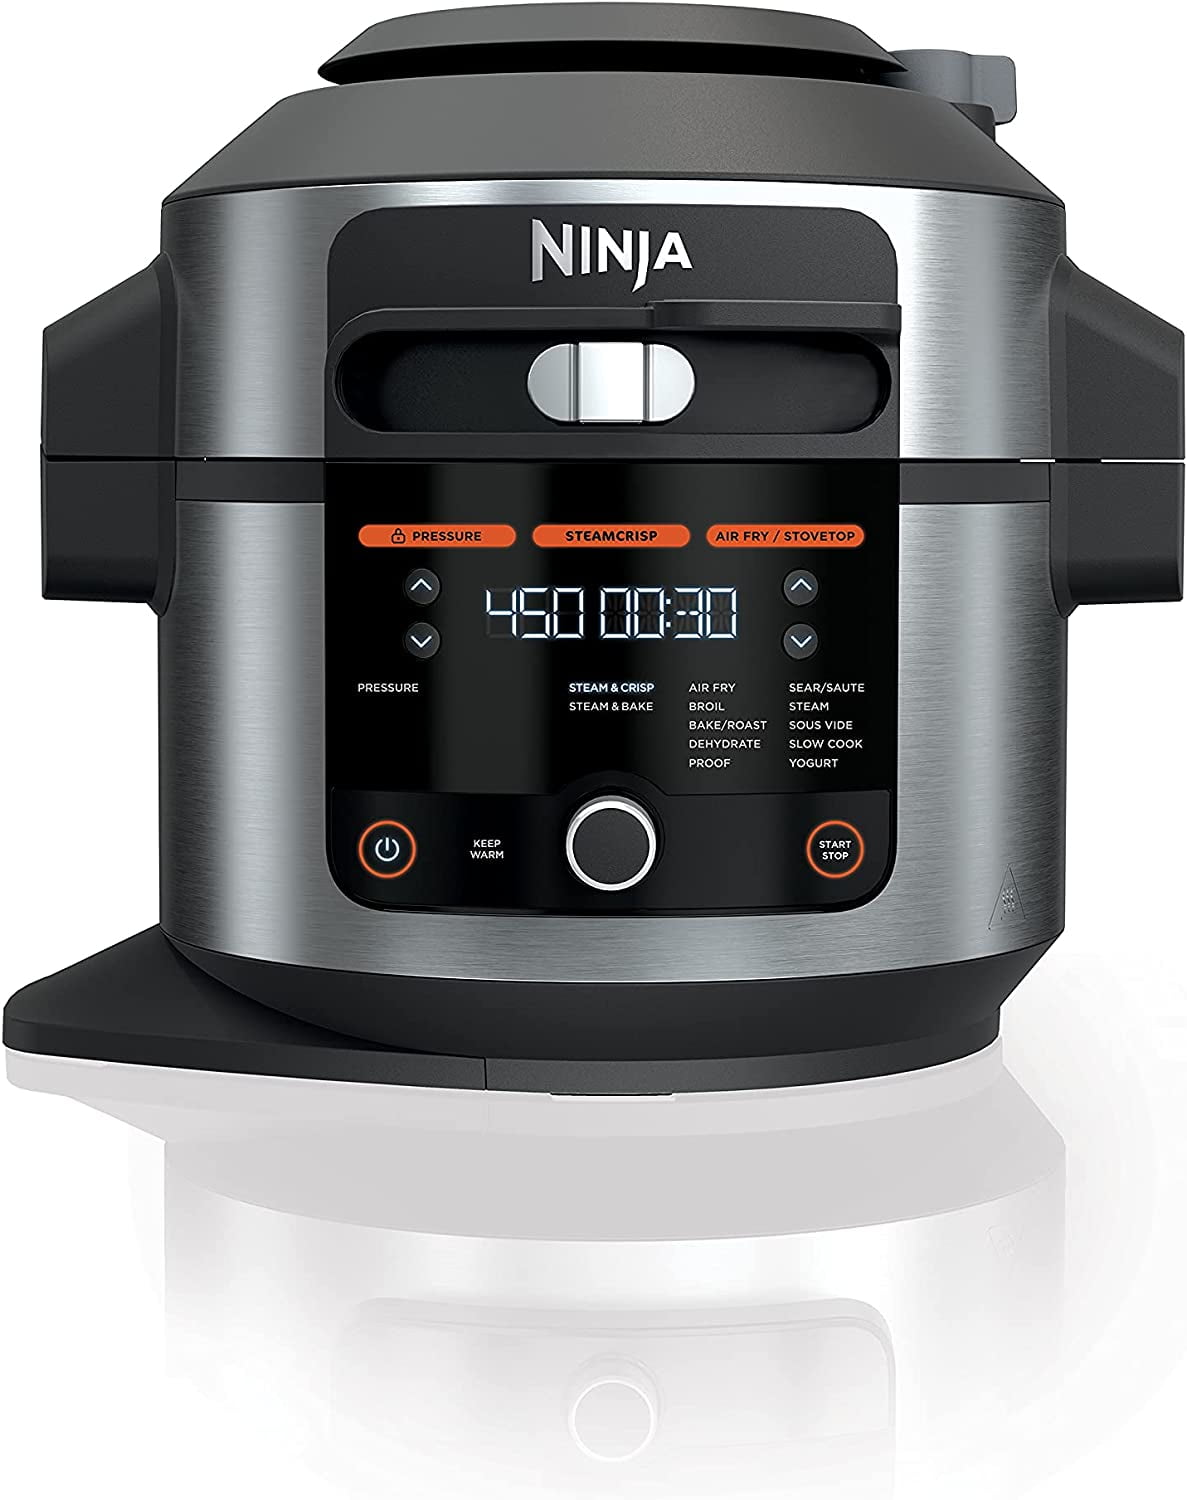 Ninja OL501 Foodi 1460 Watts 6.5 Qt. 14-in-1 Pressure Cooker Steam Fryer with SmartLid, Steam Crisp Technology